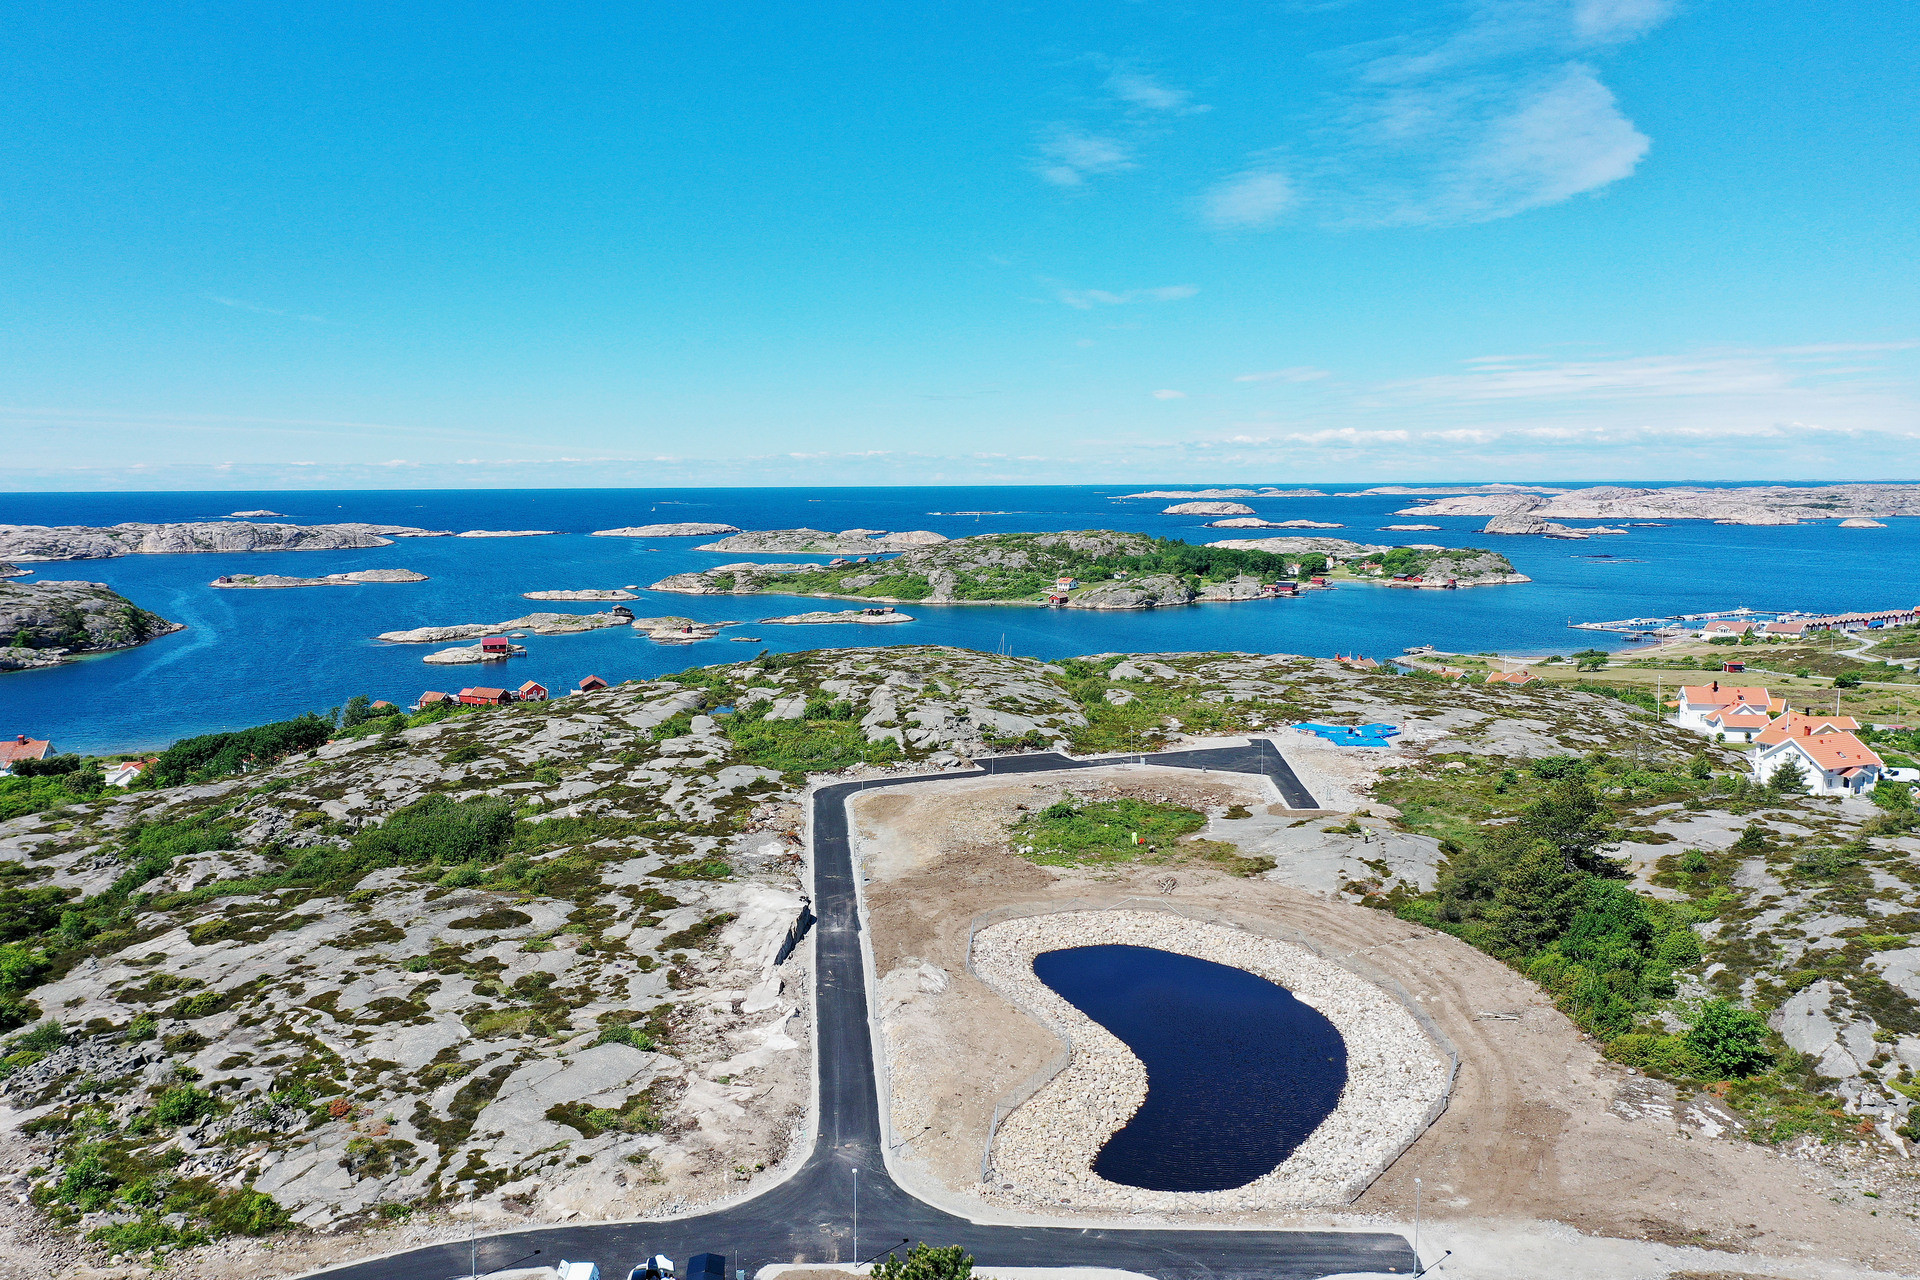 Land in Sweden for sale